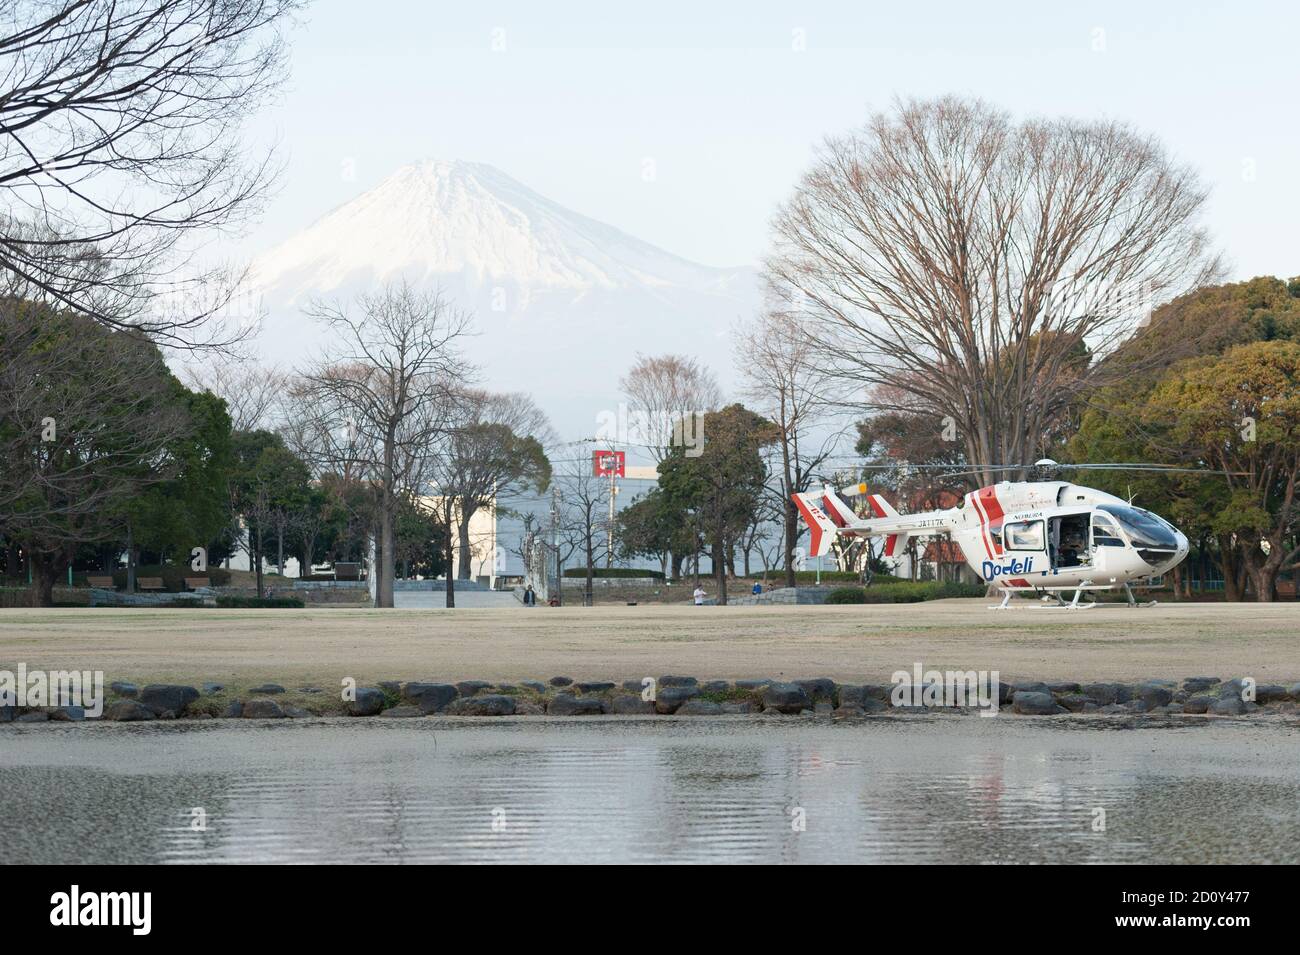 Fuji City, Shizuoka-Ken, Japan - March 9, 2013: Doctor Heli in public park, Japan. Mount Fuji background. Stock Photo